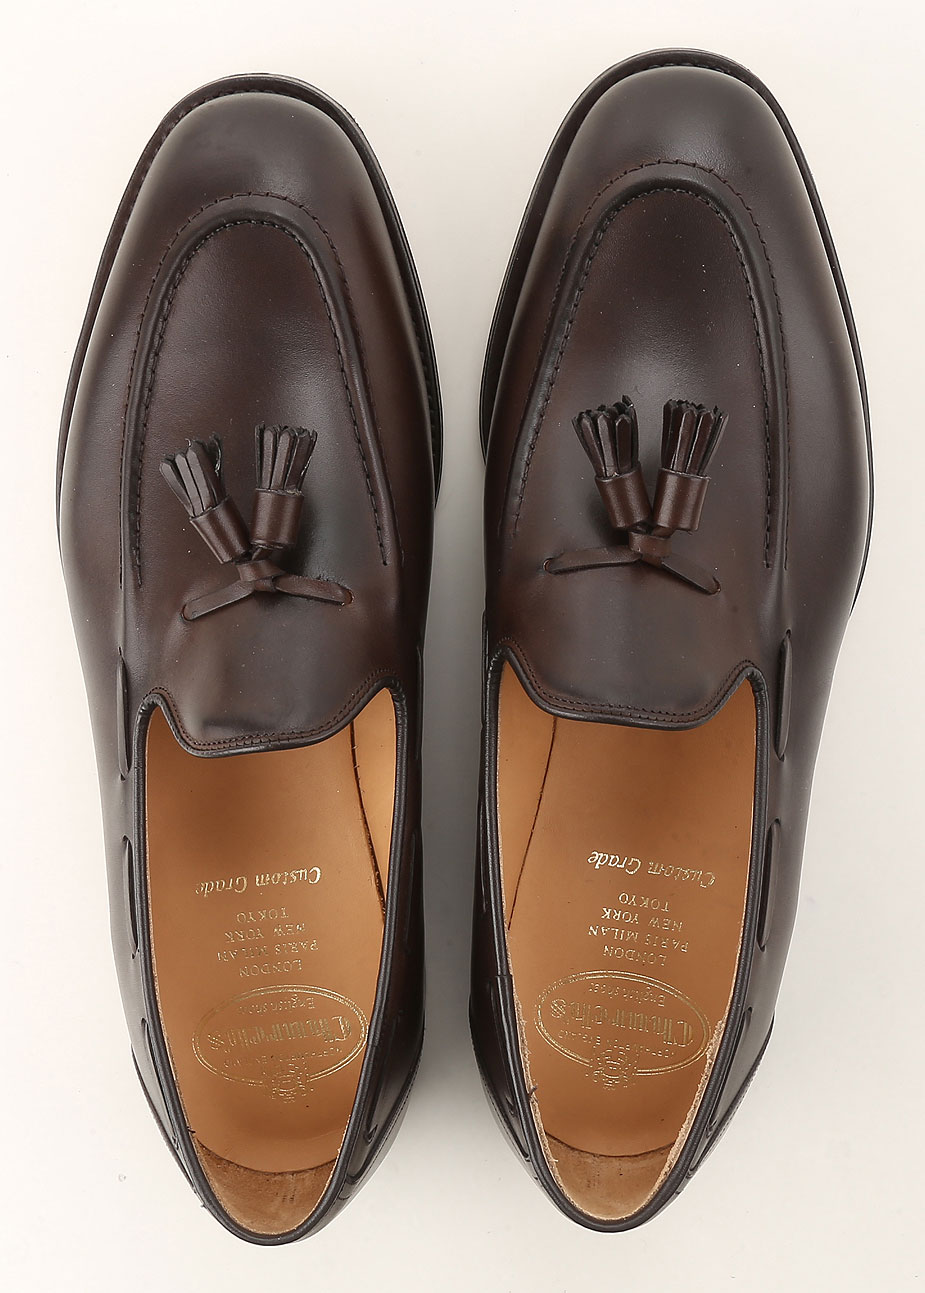 Mens Shoes Church's, Style code: kingsley-edb027-9xm